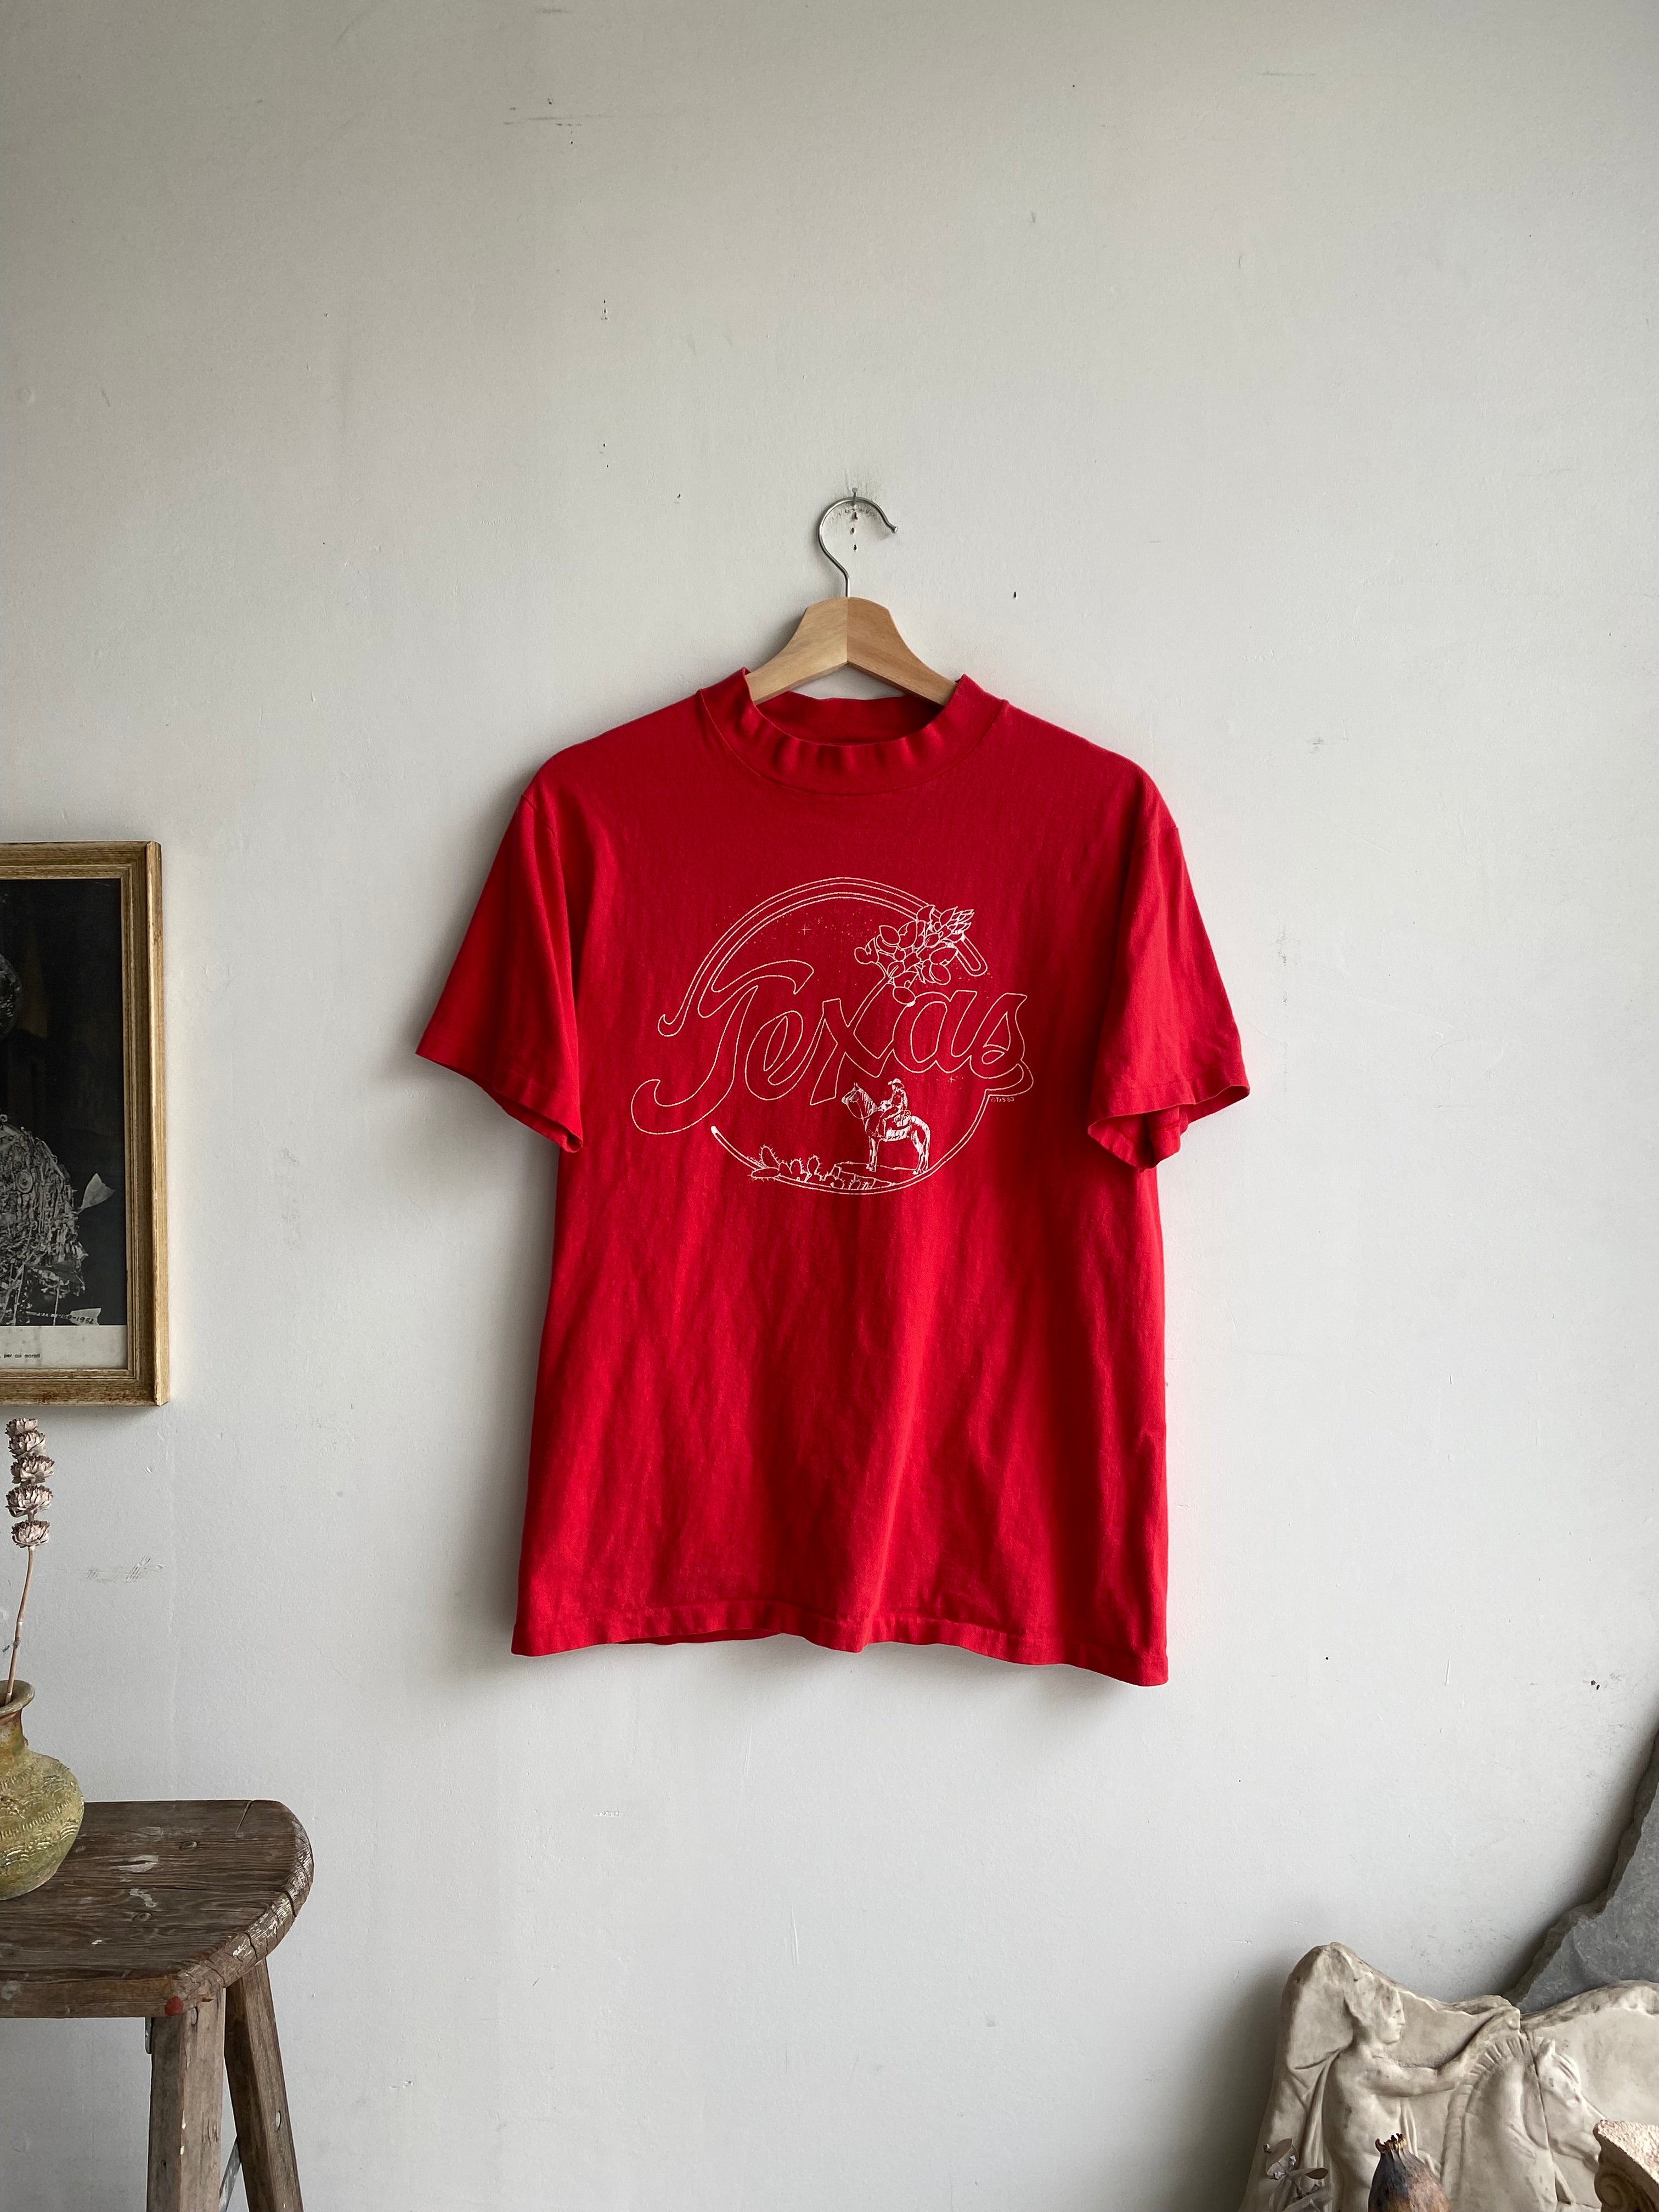 1983 Texas T-Shirt (M)